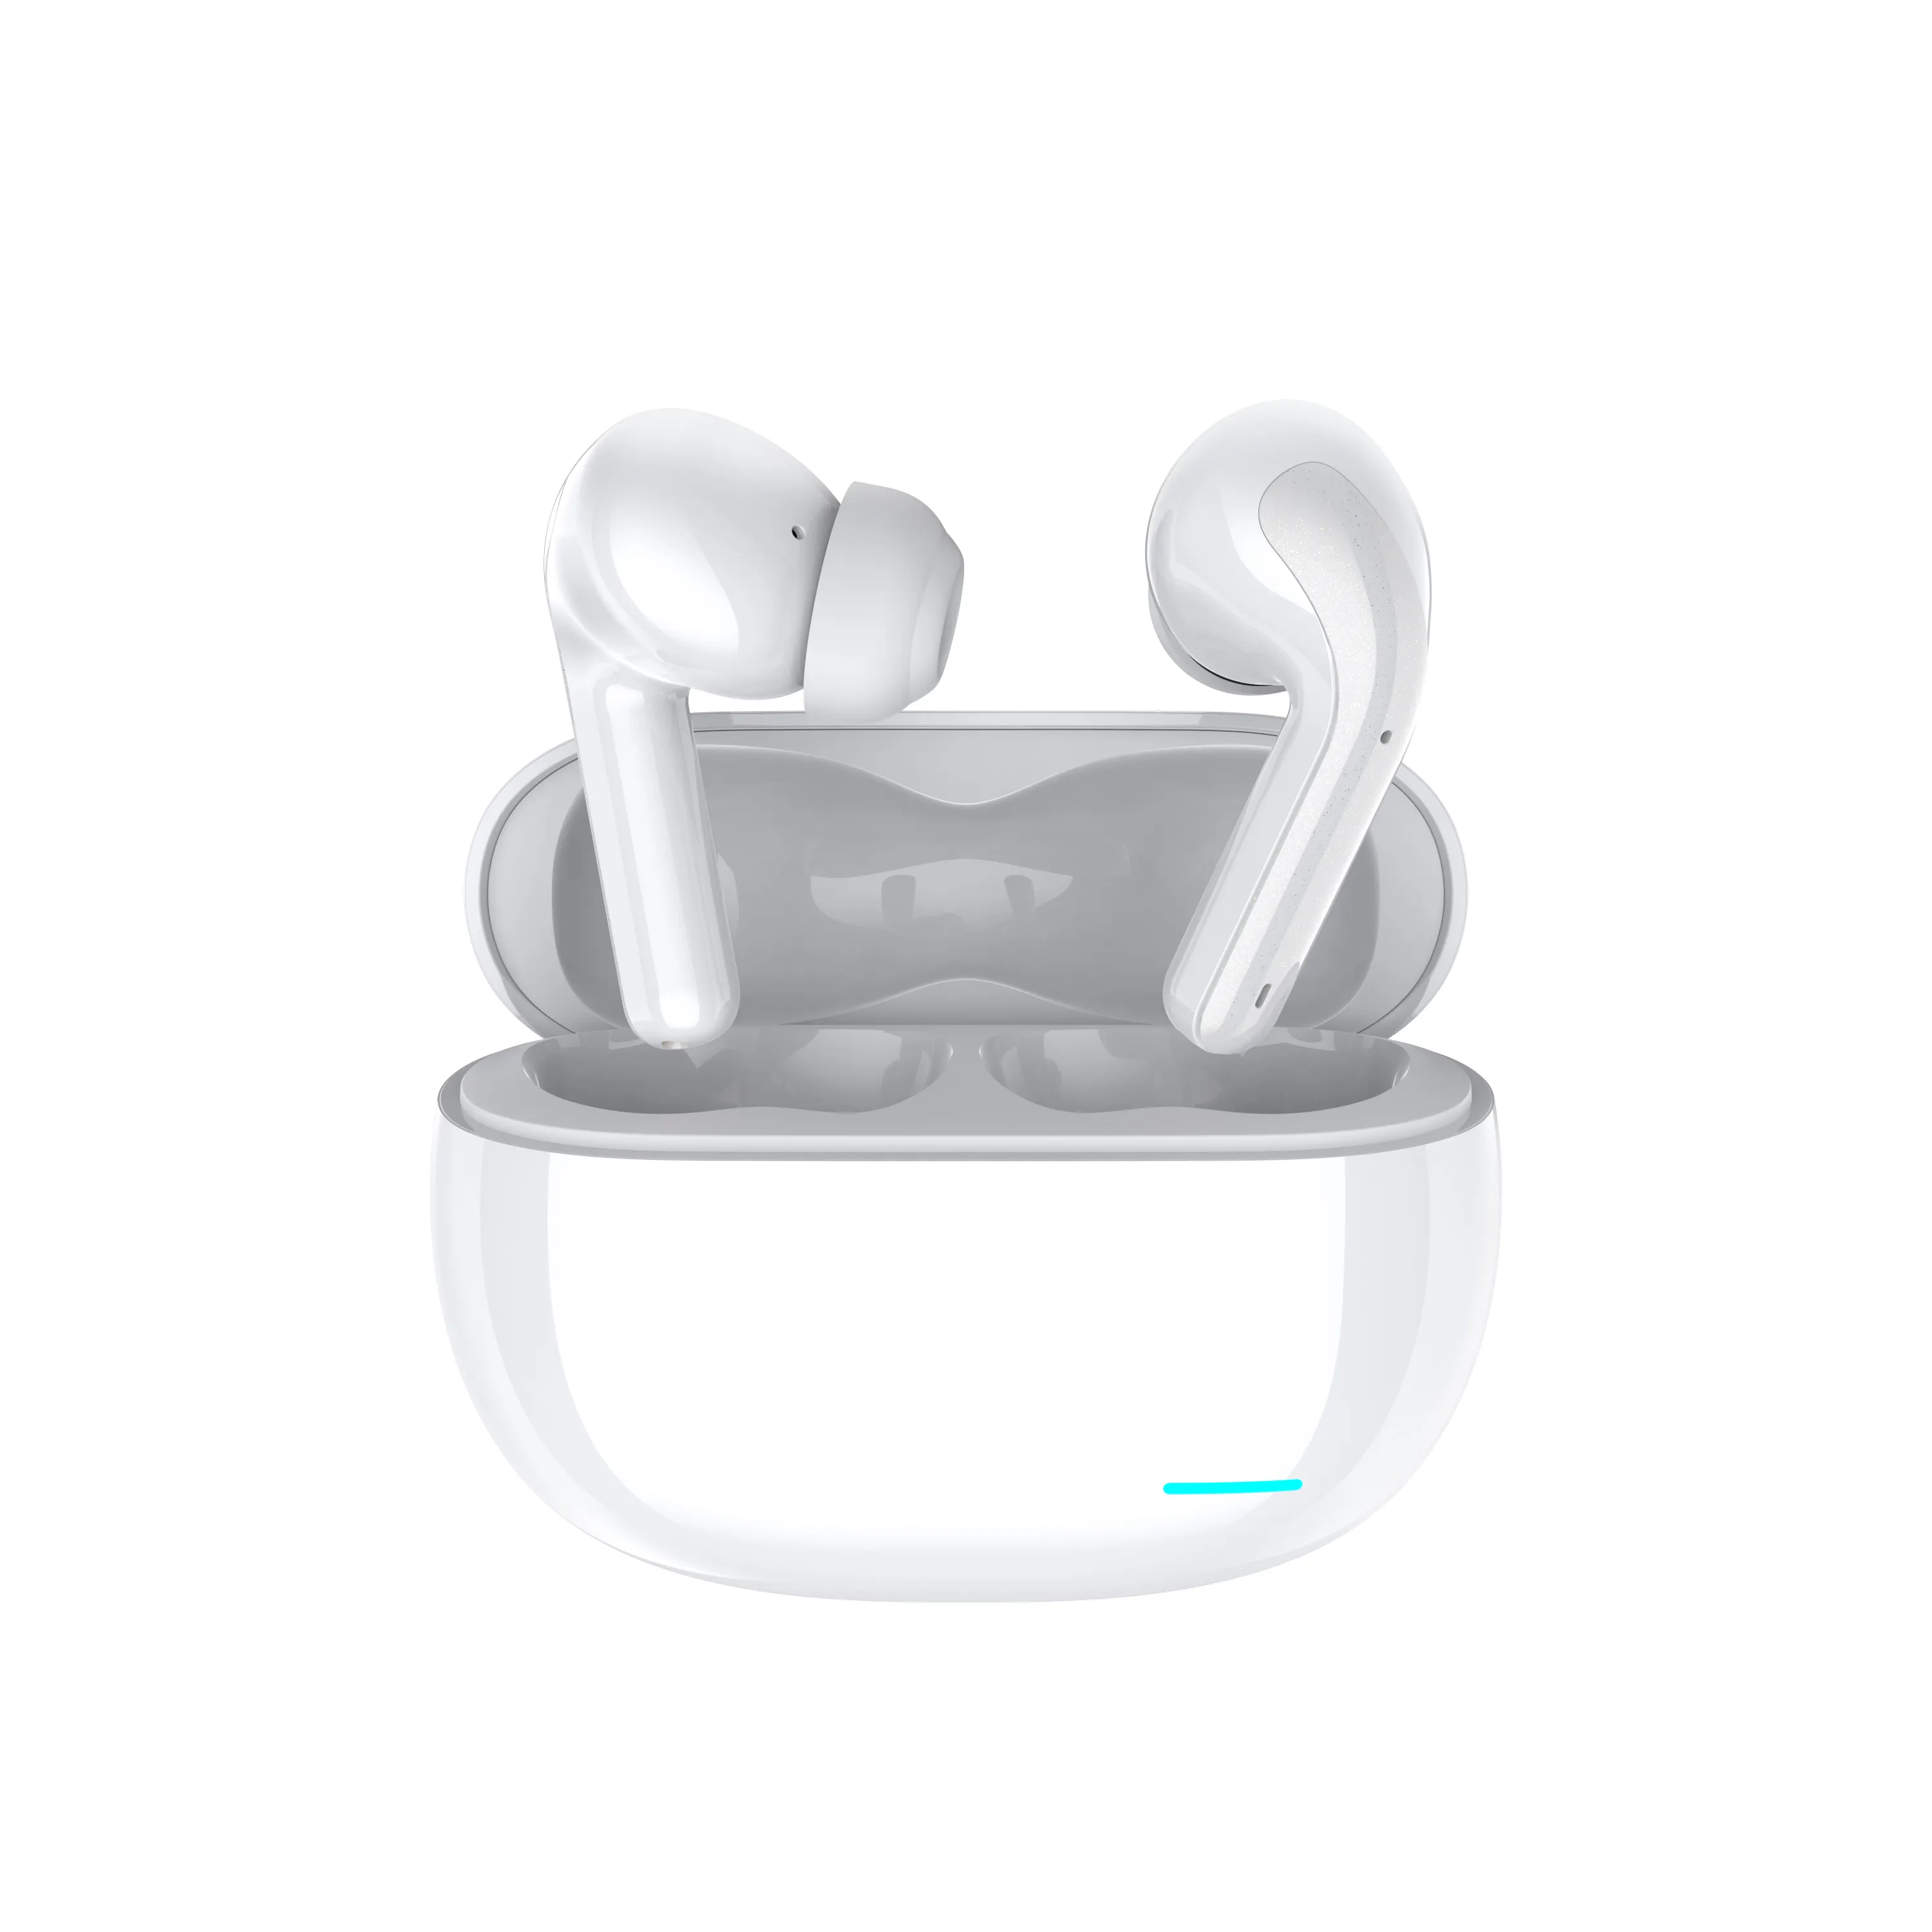 ENC Geräuschunterdrückung Bluetooth Tws Ohrhörer kabellose Stereo-Touch-Ohrhörer